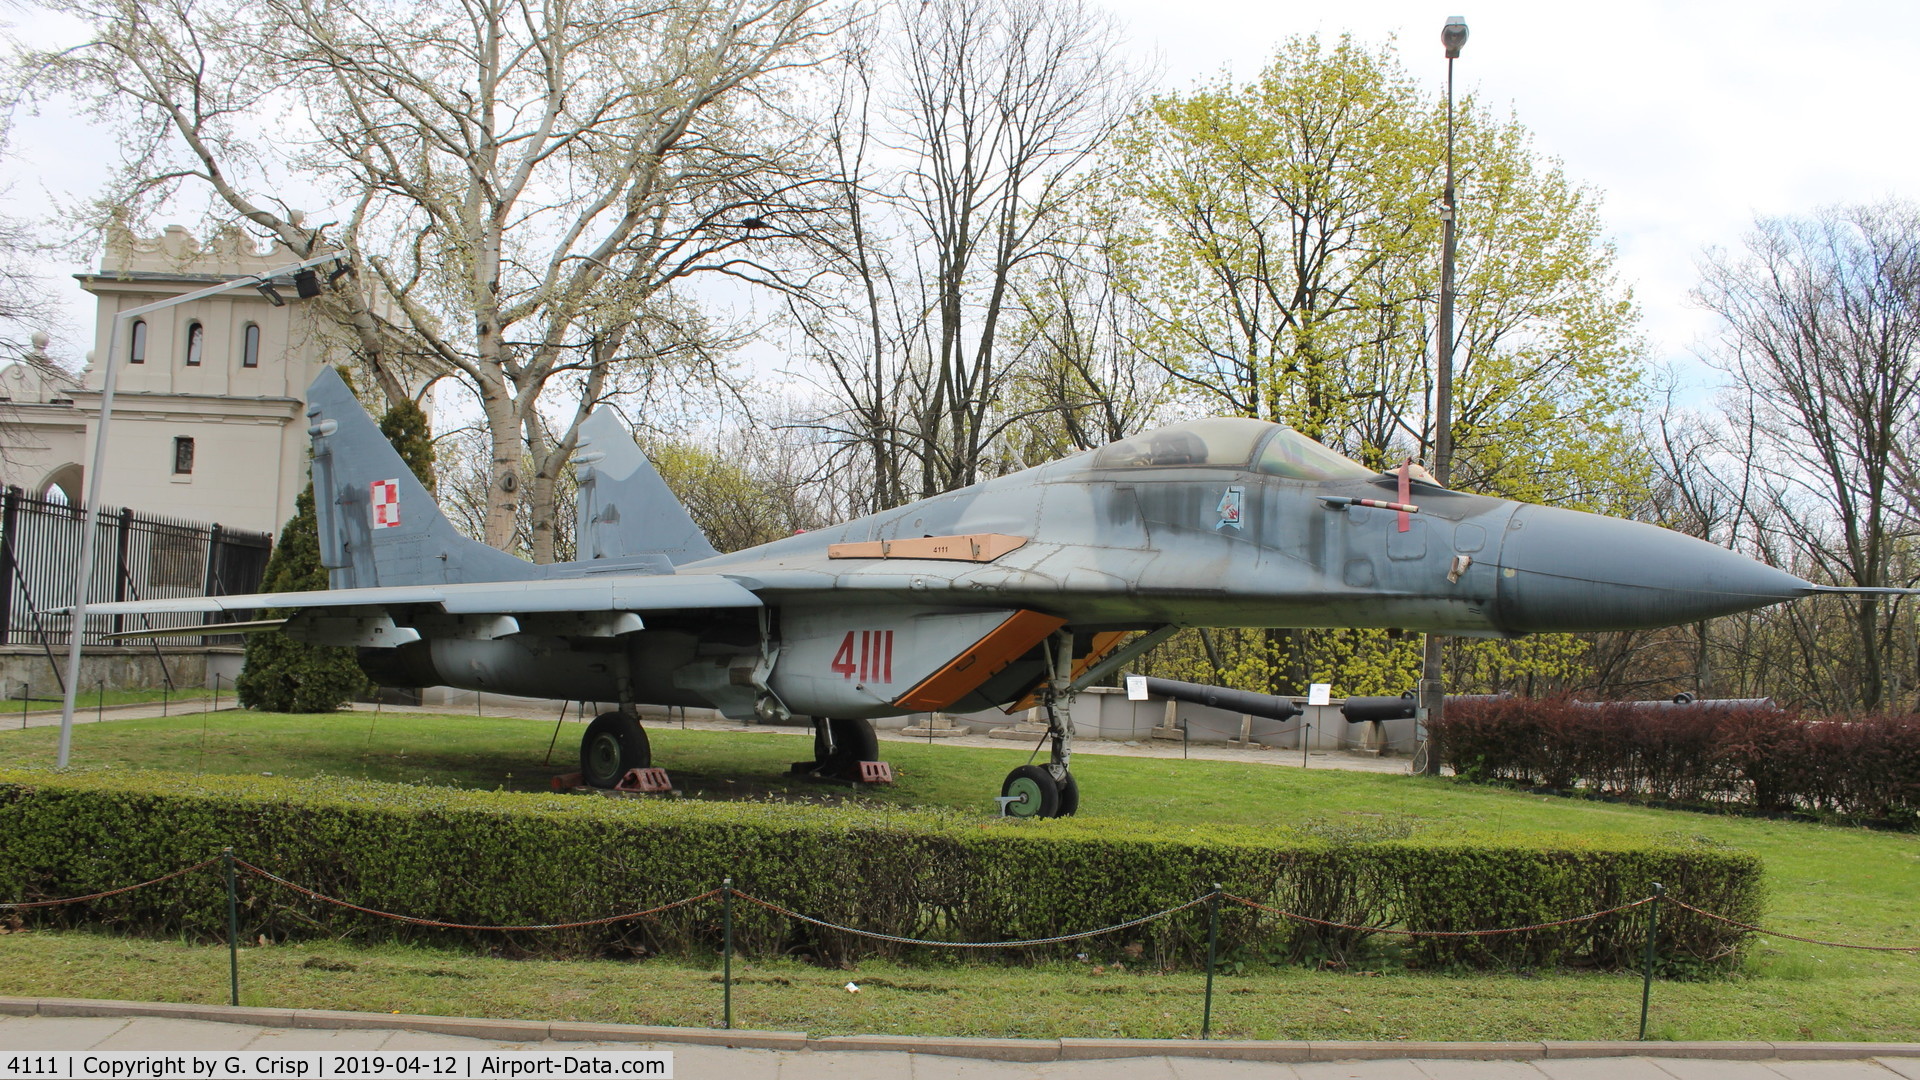 4111, 1988 Mikoyan-Gurevich MiG-29G C/N 2960525111, Polish Army Museum, Warsaw, Poland